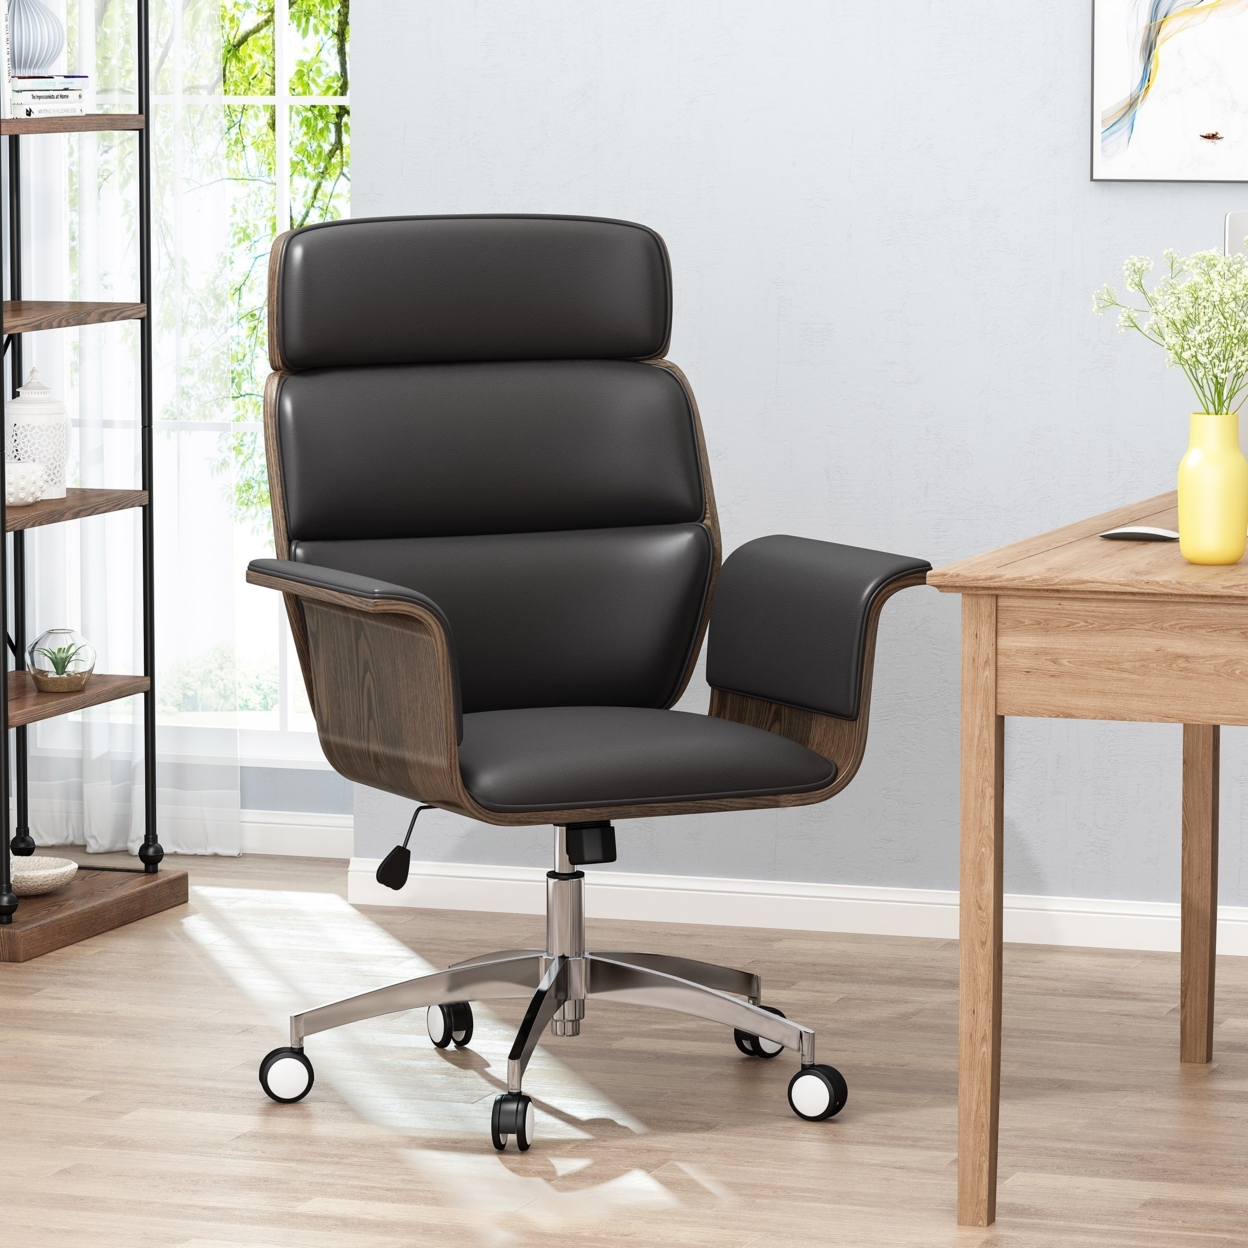 Aleigha Mid-Century Modern Swivel Office Chair - Gray/black